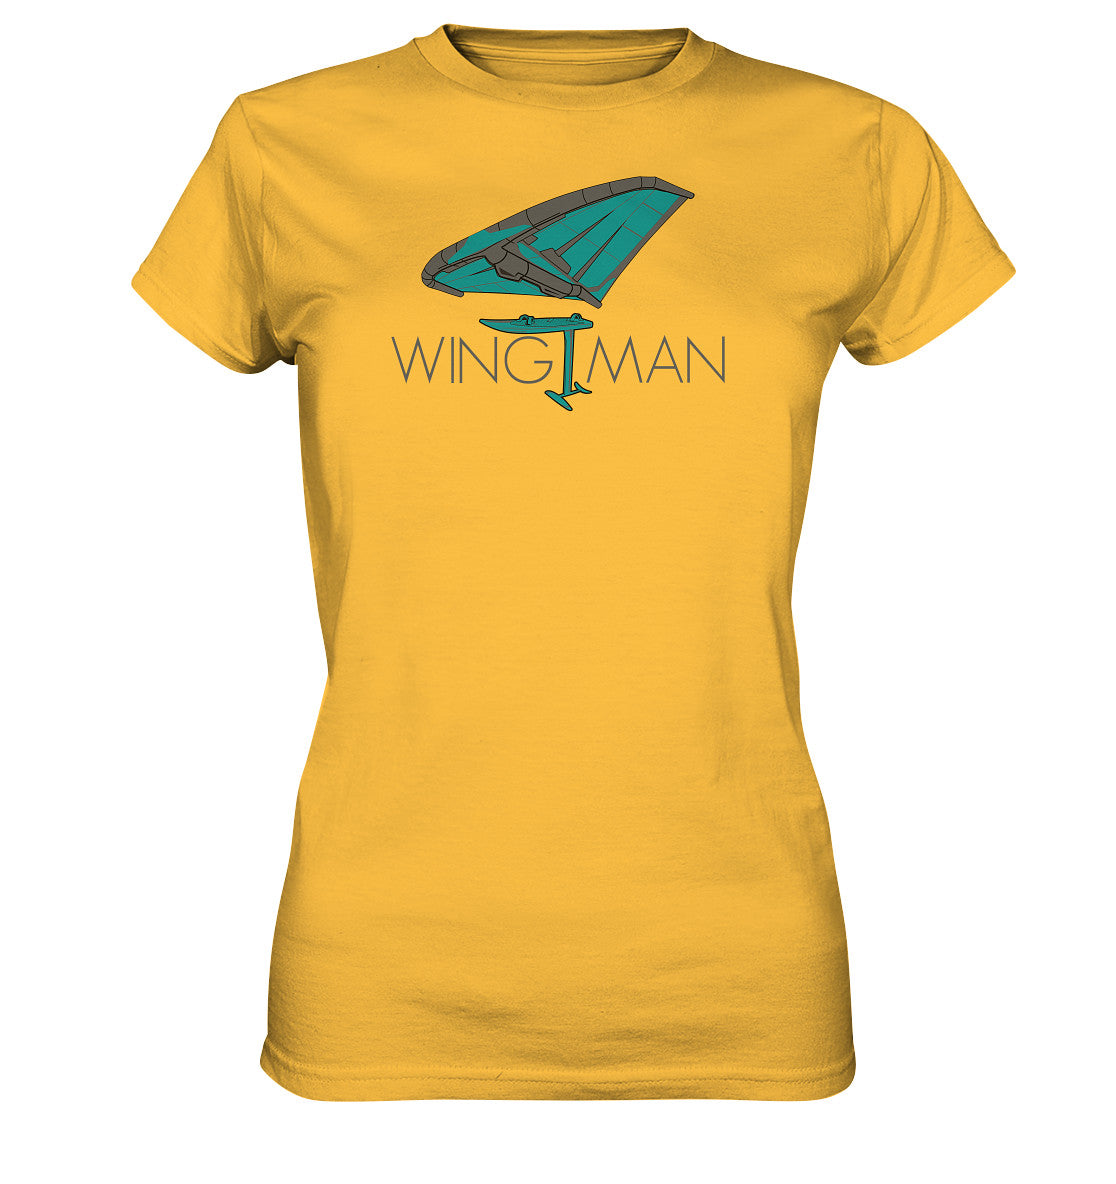 Wingfoiling-WINGMAN - Ladies Premium Shirt